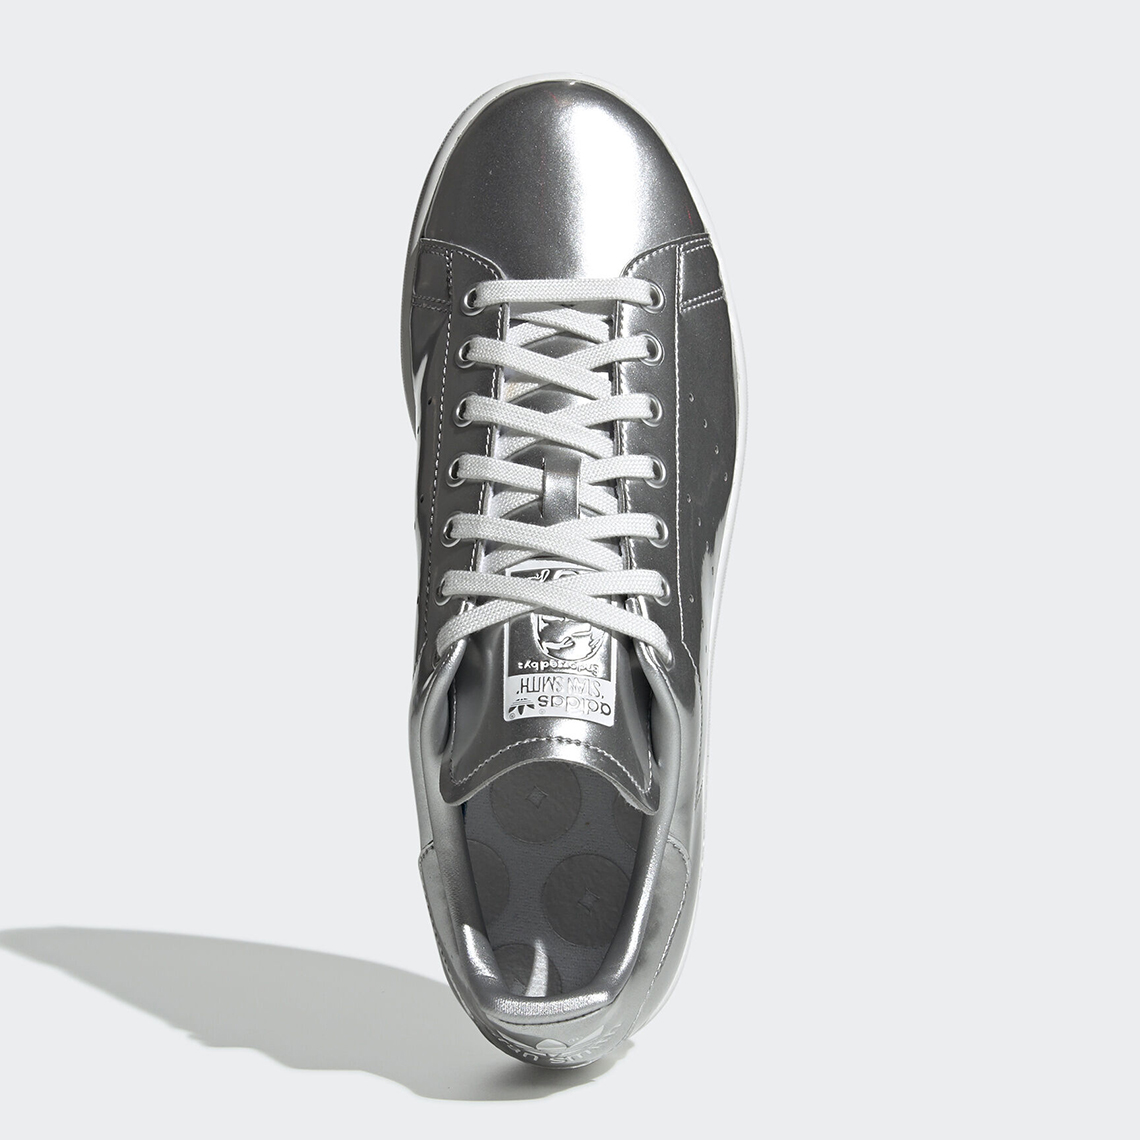 adidas Originals Bring Matte Metals To The Stan Smith - SneakerNews.com